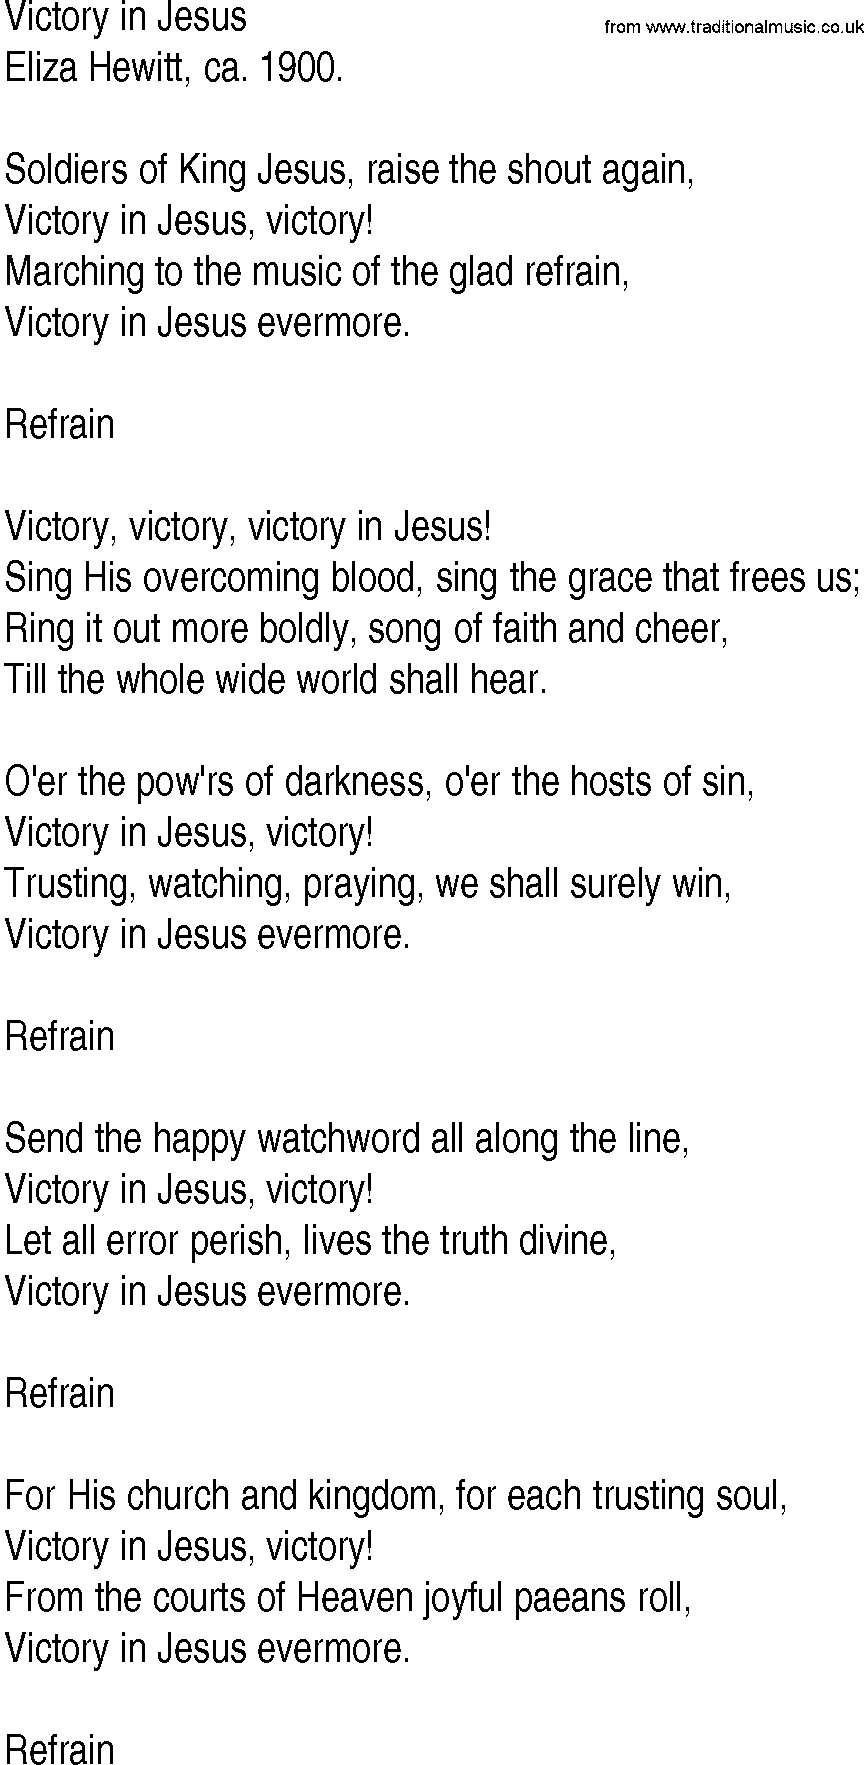 Hymn and Gospel Song Lyrics for Victory in Jesus by Eliza Hewitt ca